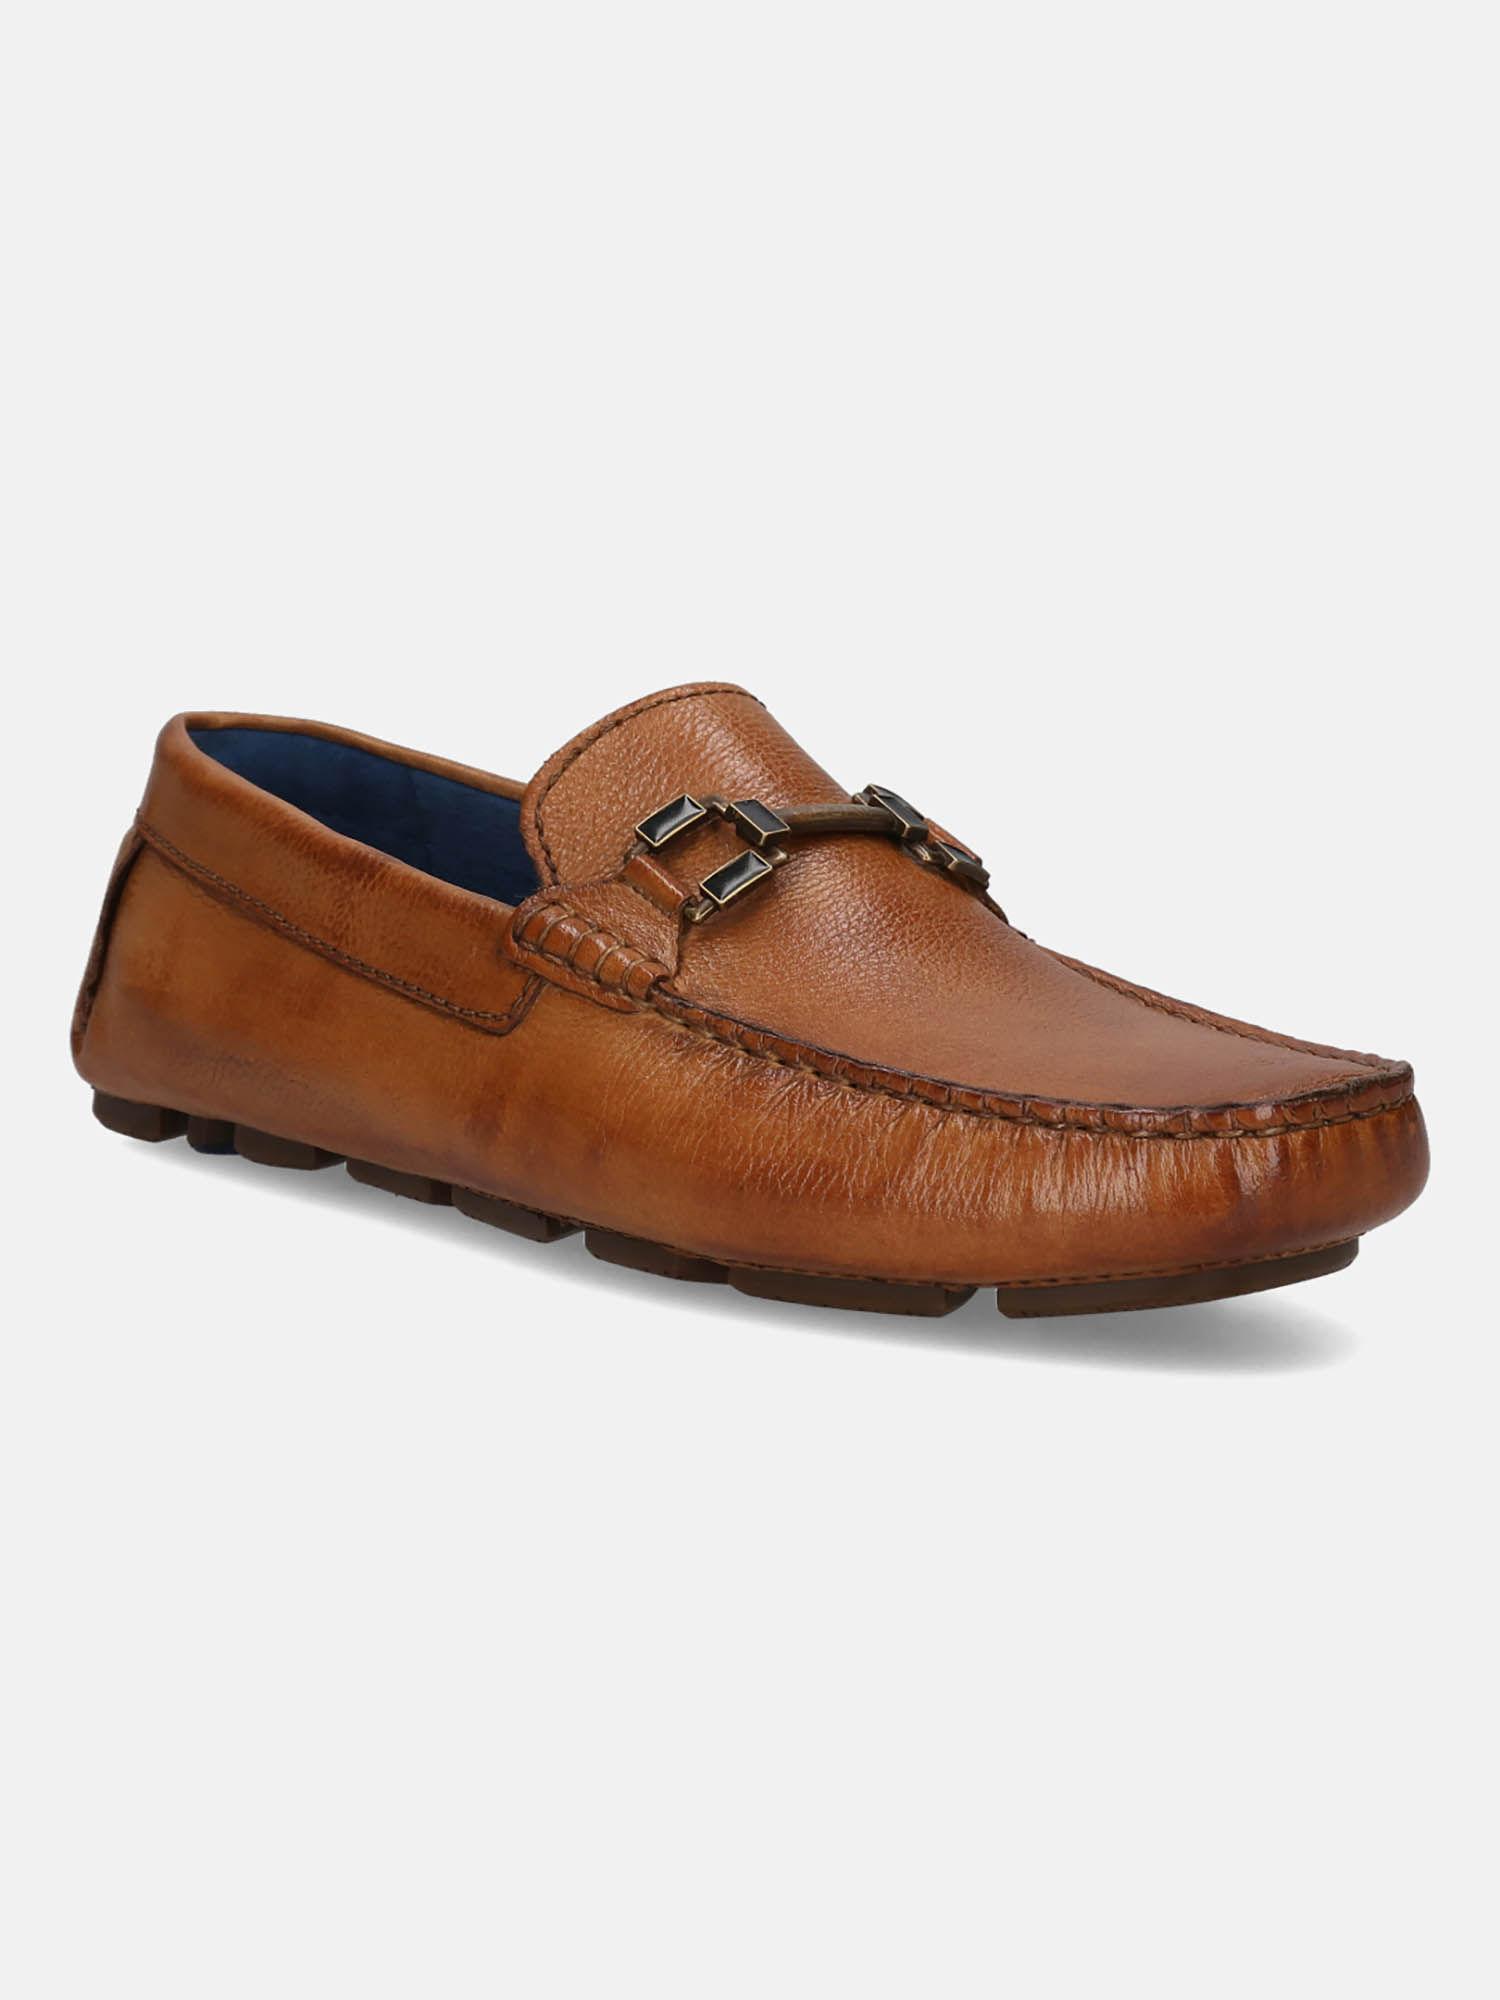 hexa men cognac leather casual loafers slip-on